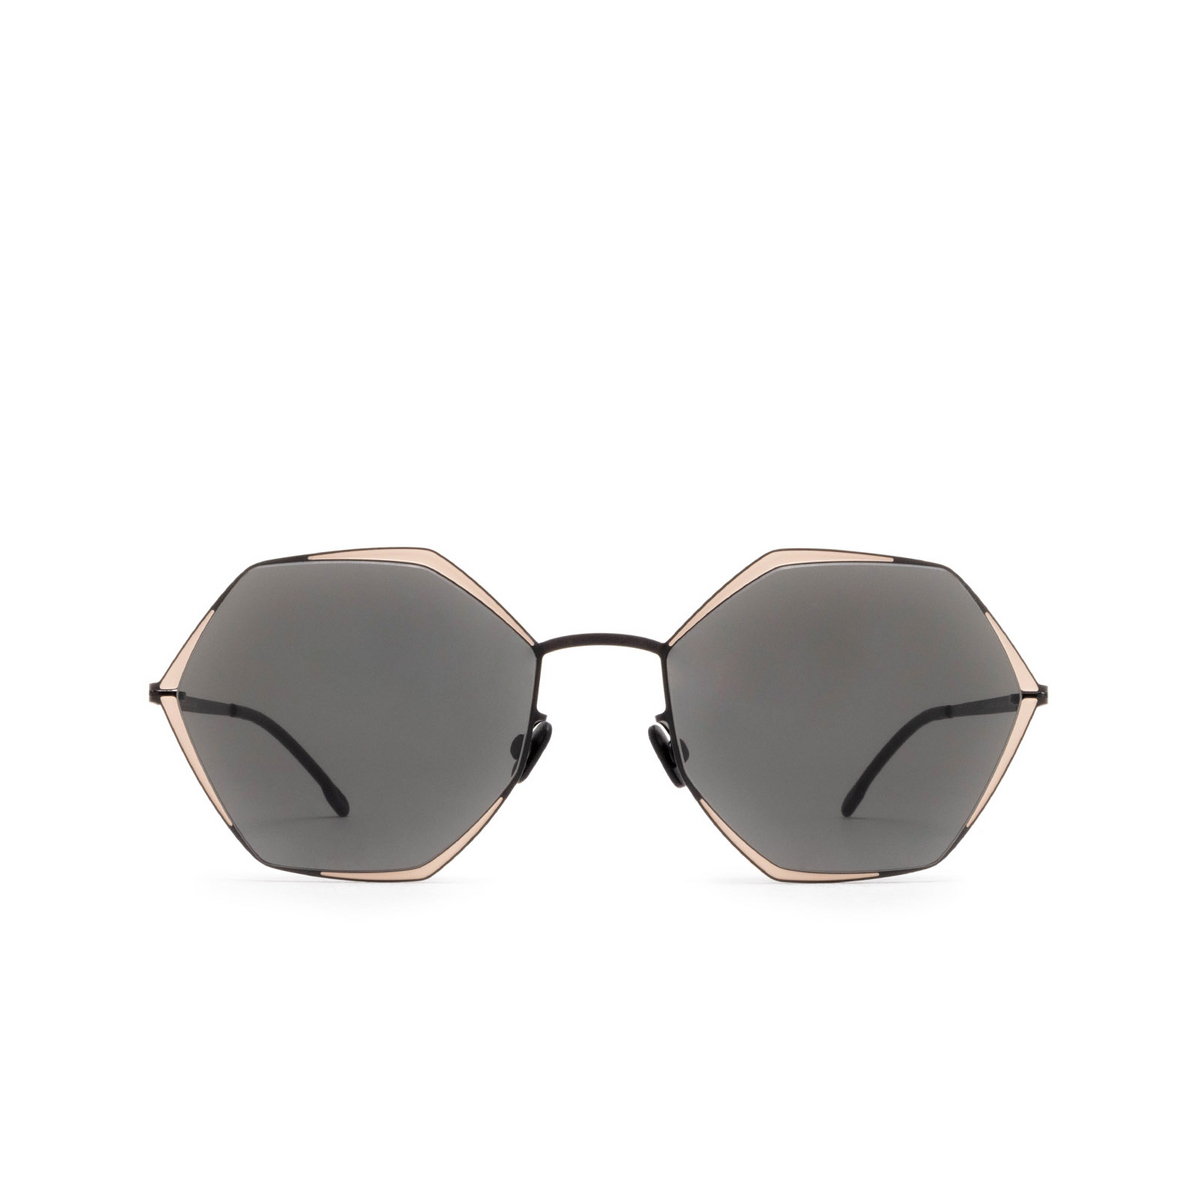 Mykita® Irregular Sunglasses: Alessia color 404 Black/sand - front view